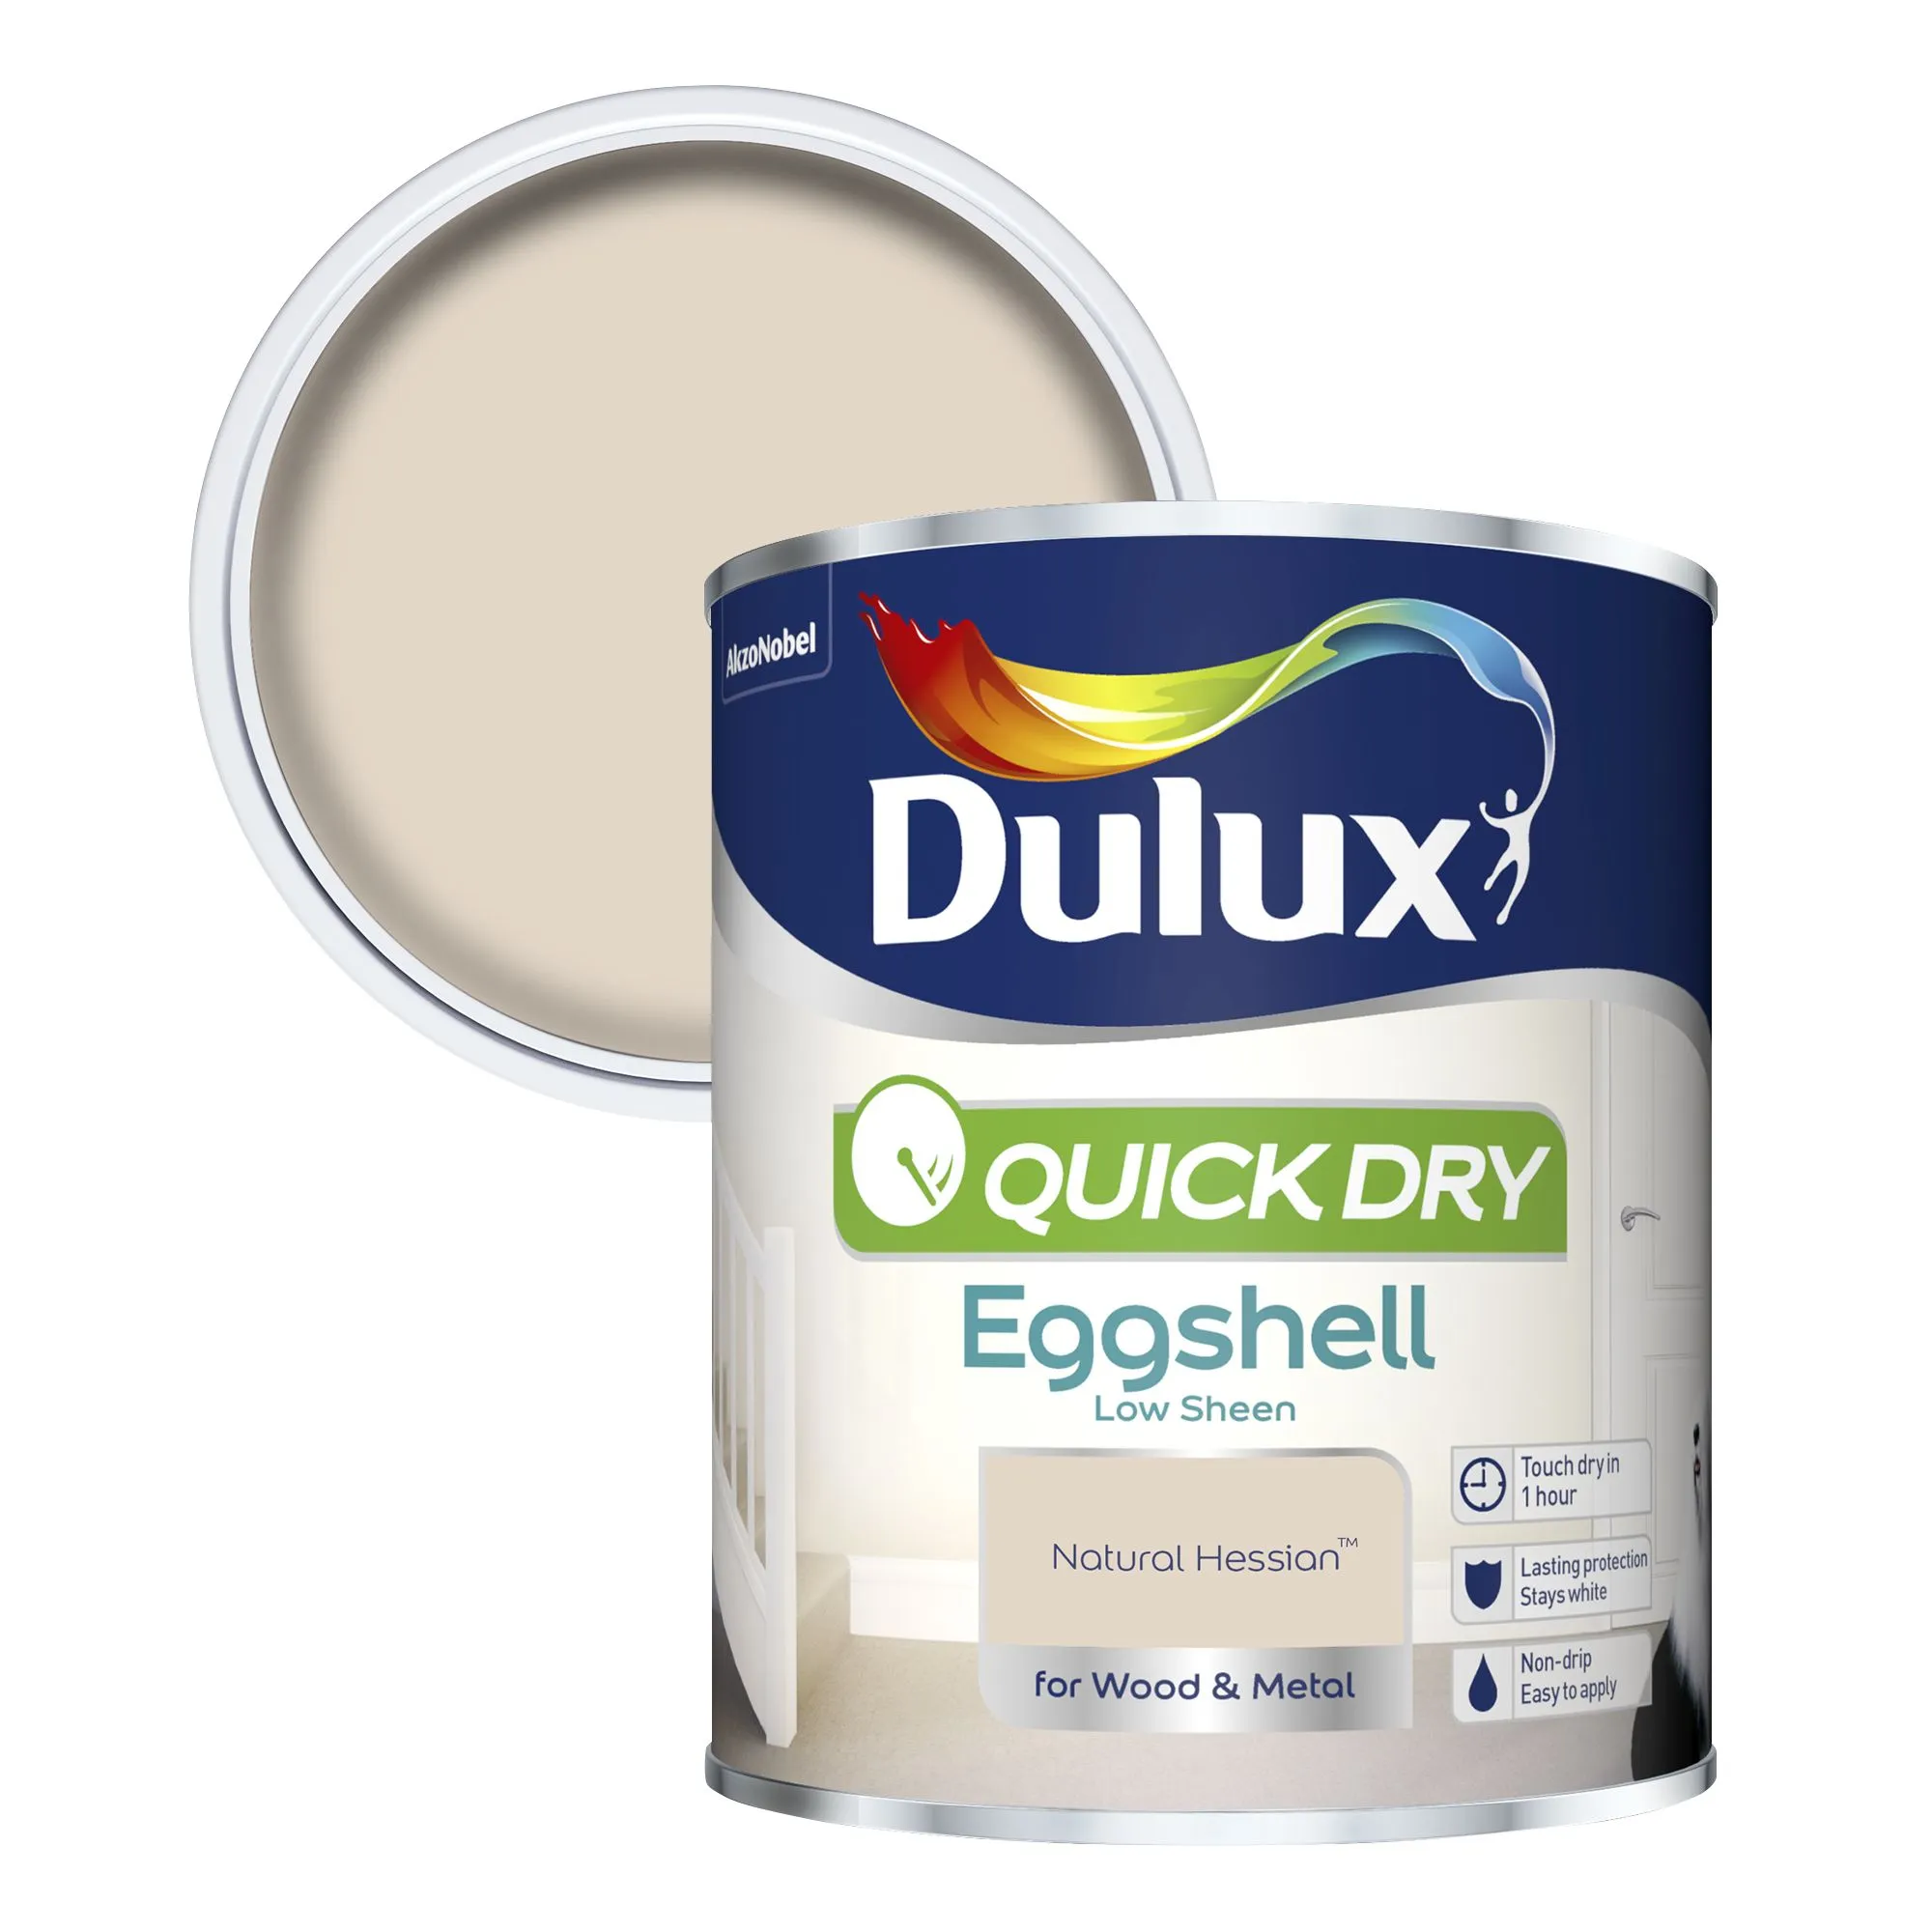 Dulux Quick dry Natural hessian Eggshell Metal & wood paint, 0.75L